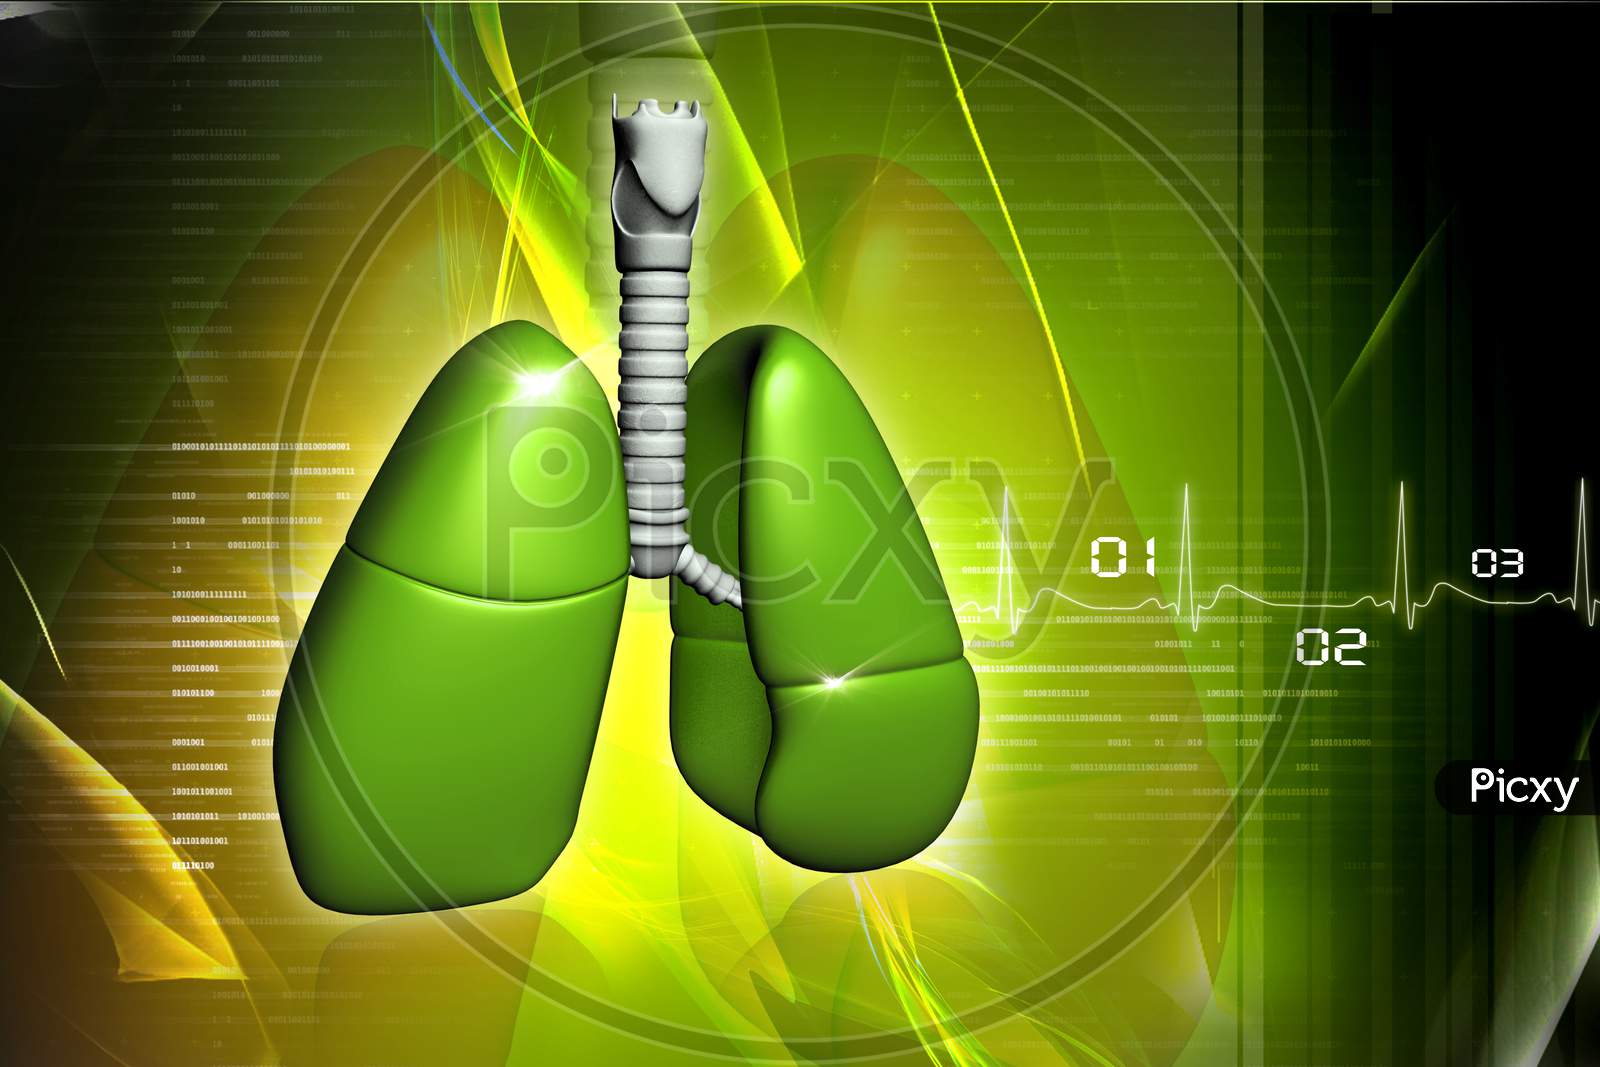 Human Lungs In Digital Design